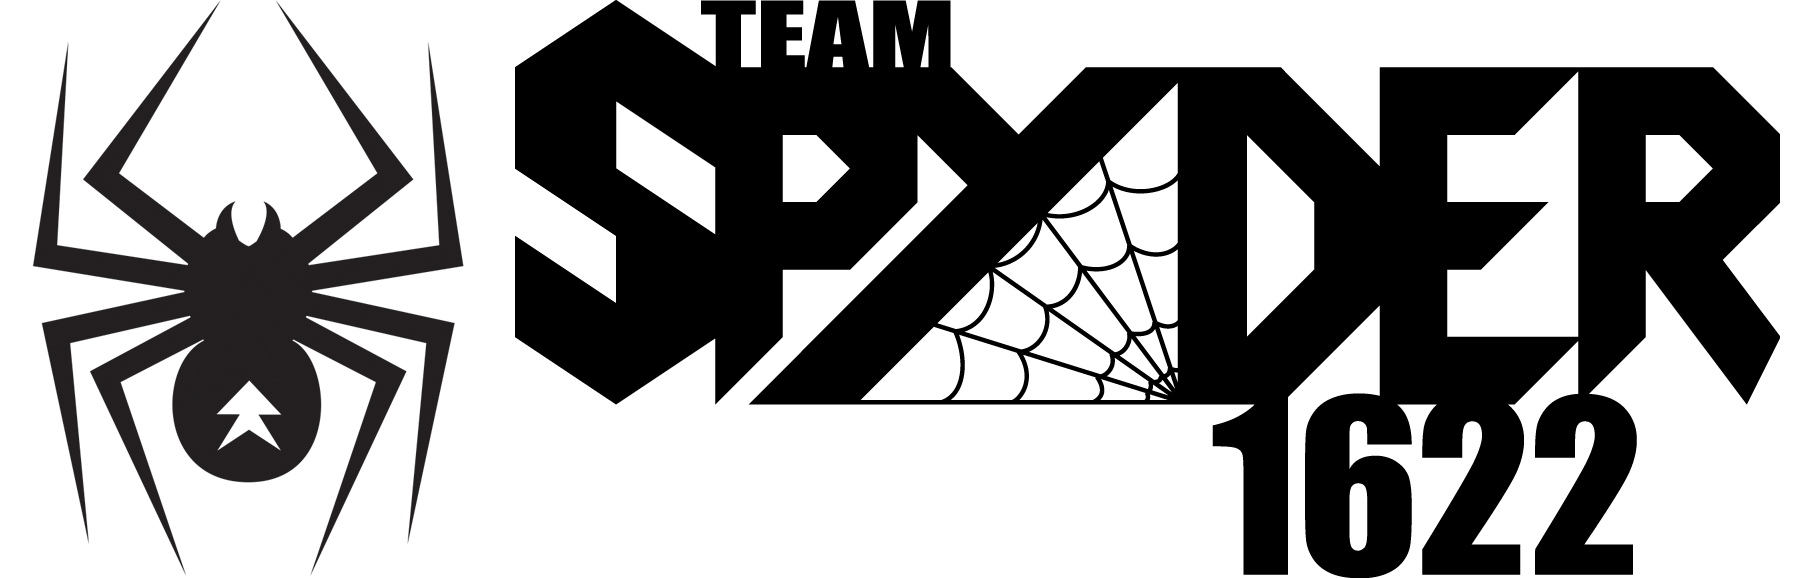 Spyder Logo - Team Spyder 1622